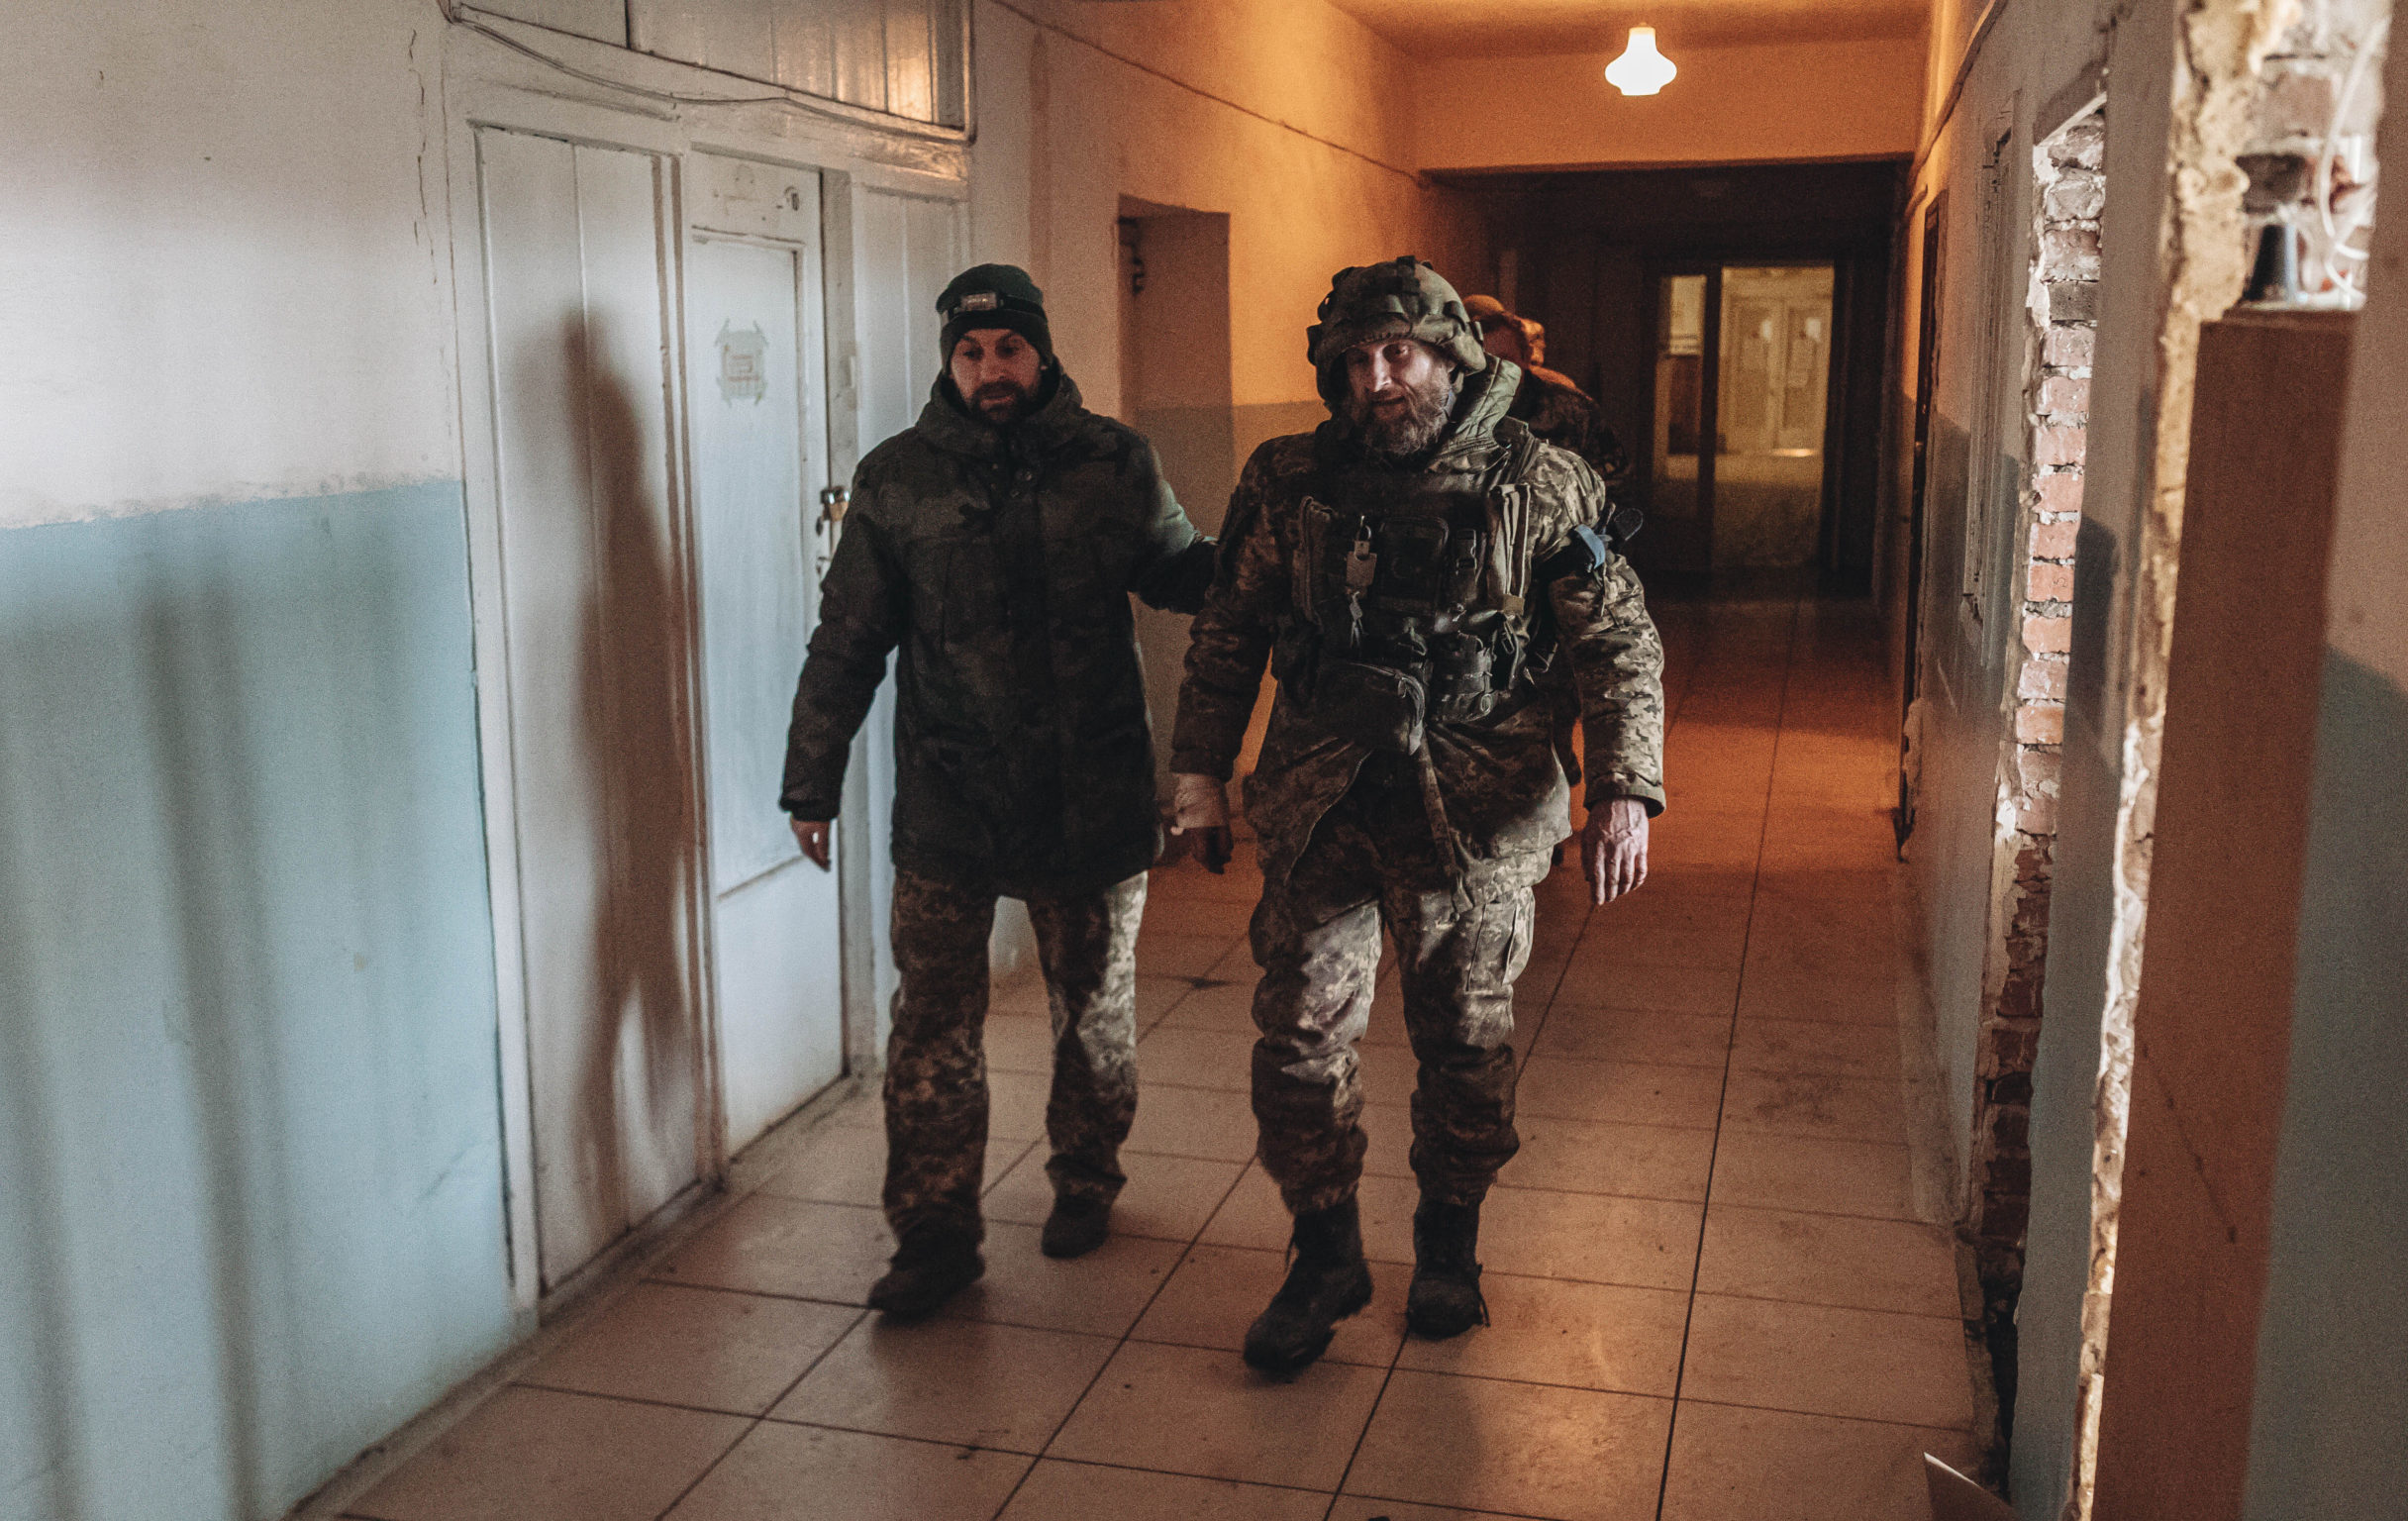 Ukrainian army medics treat wounded Ukrainian soldiers in Bakhmut